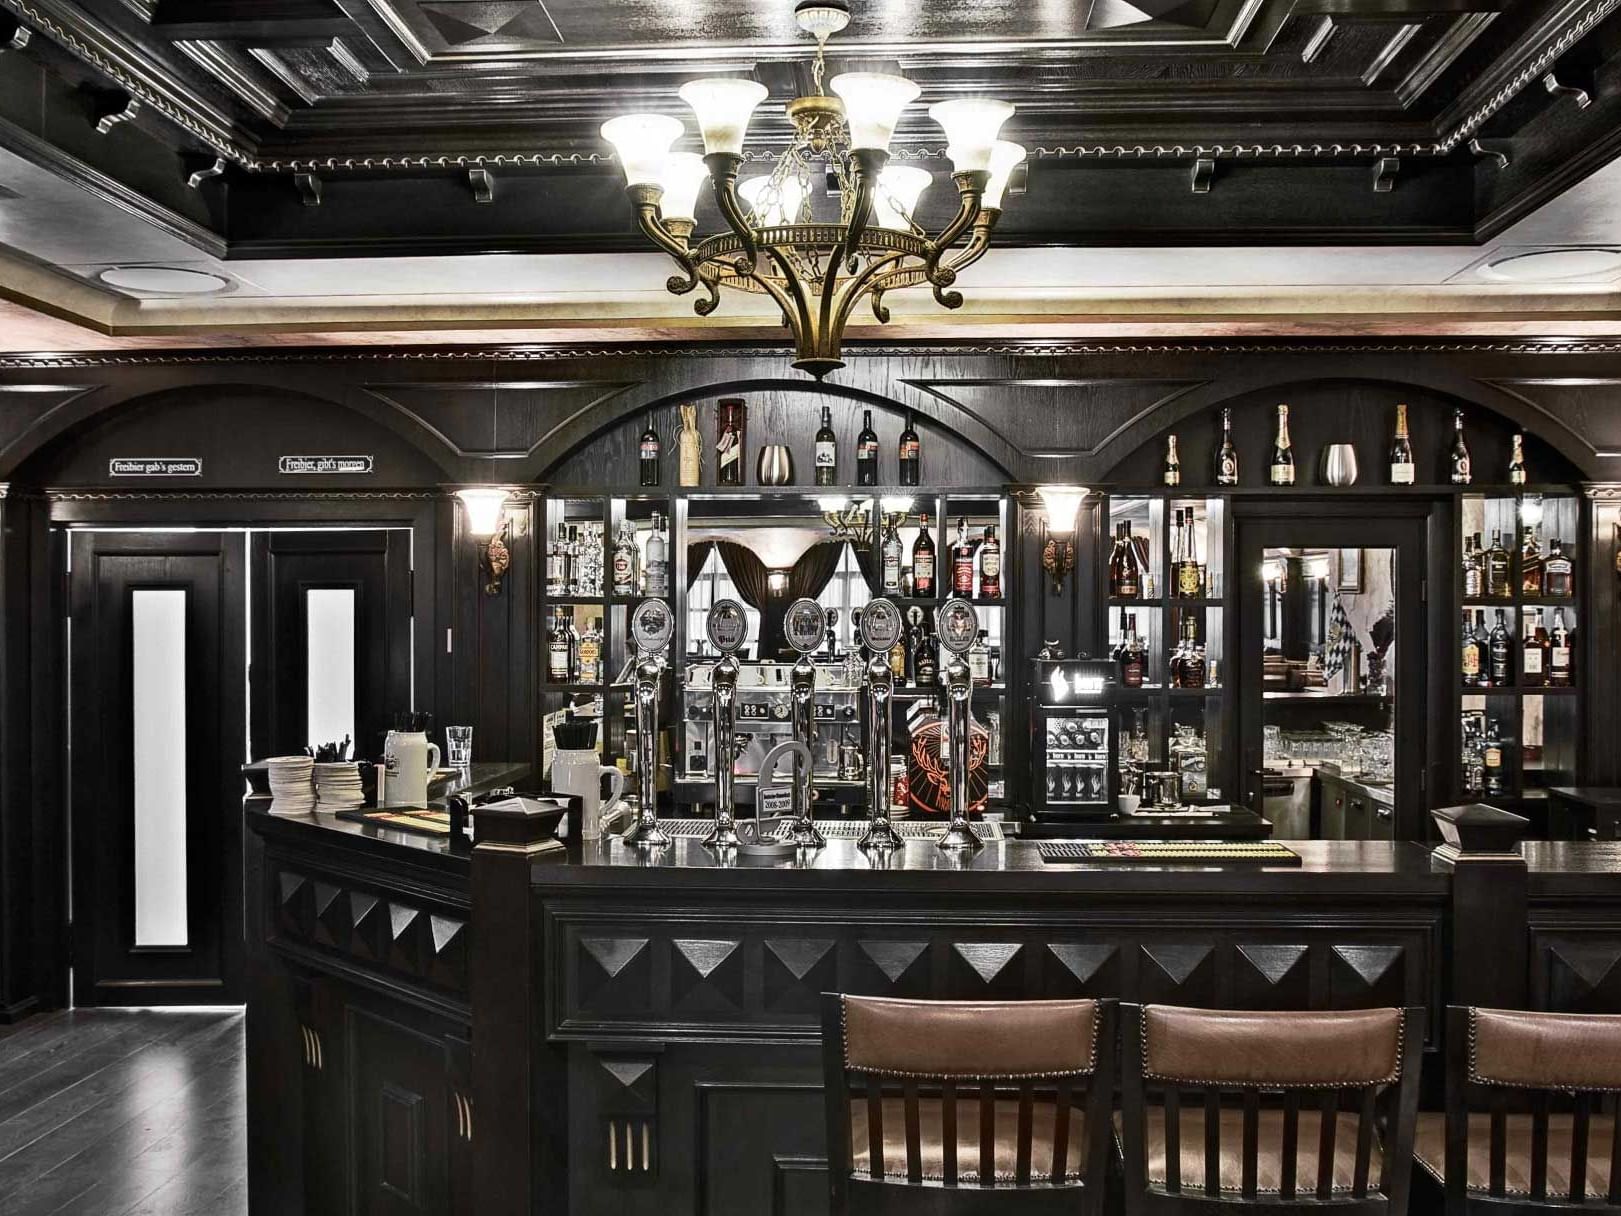 Bar Counter in Bier Haus near Ana Hotels in Romania